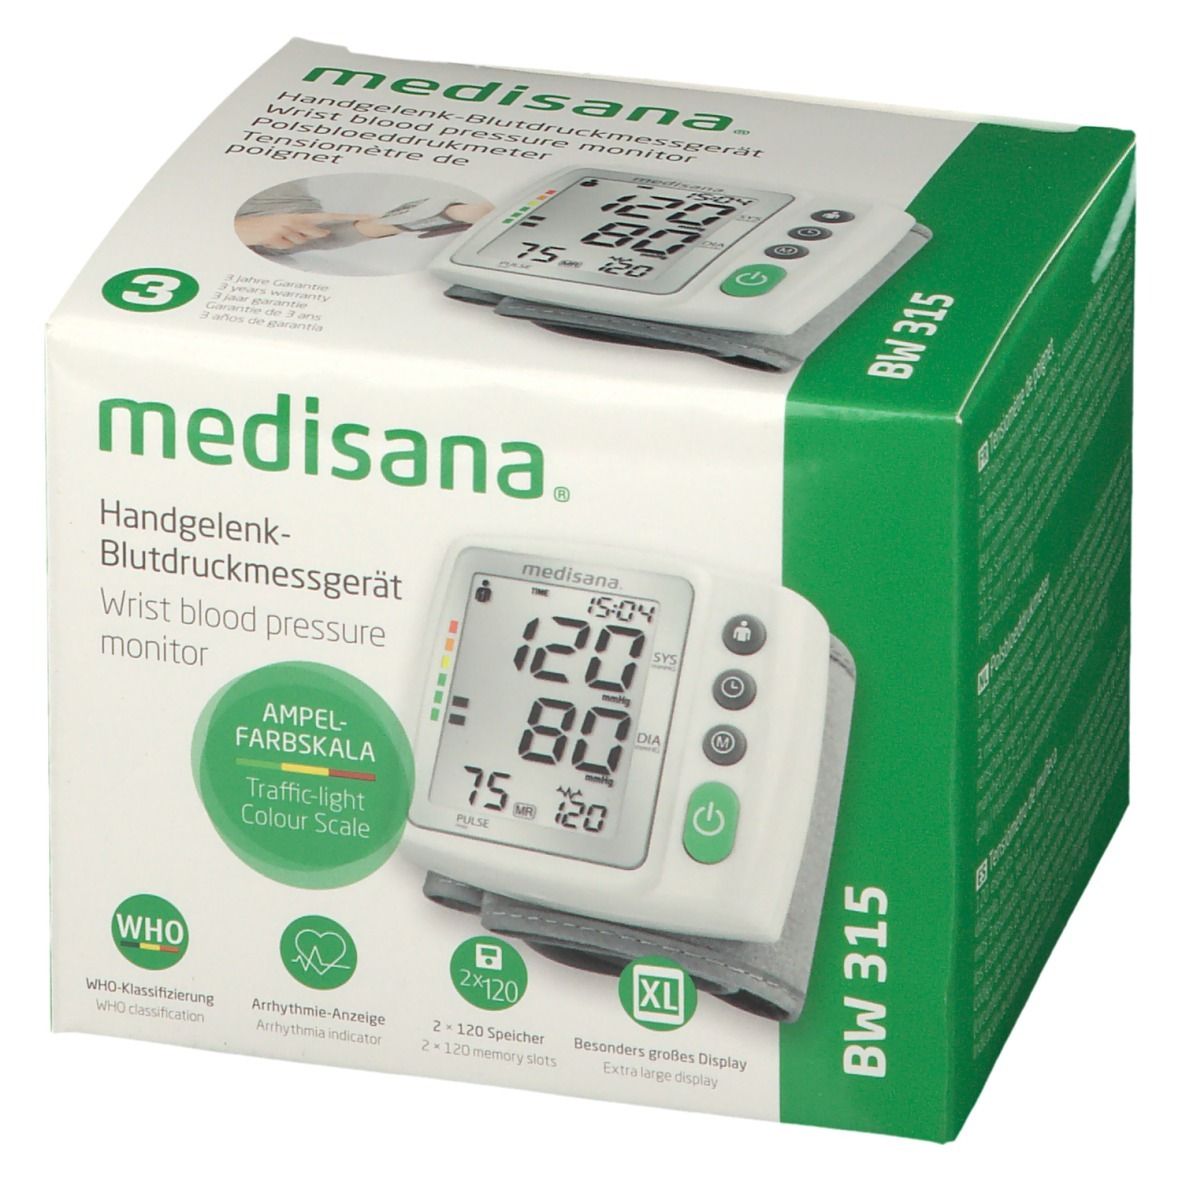 Medisana Handgelenk-Blutdruckmessgerät BW 1 SHOP St - 315 APOTHEKE